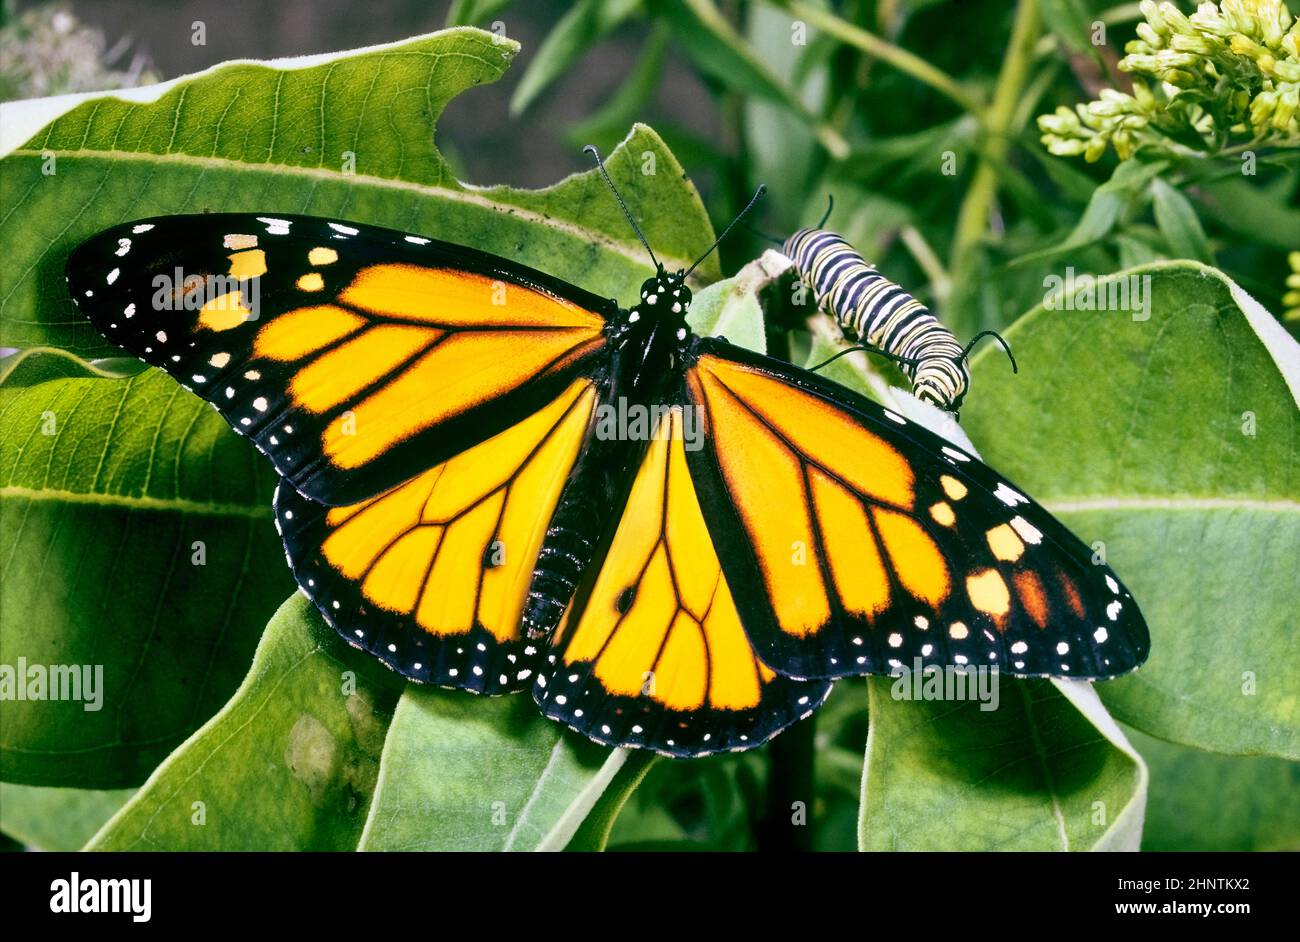 Mariposa monarca (Danaus plexippus) y oruga Foto de stock